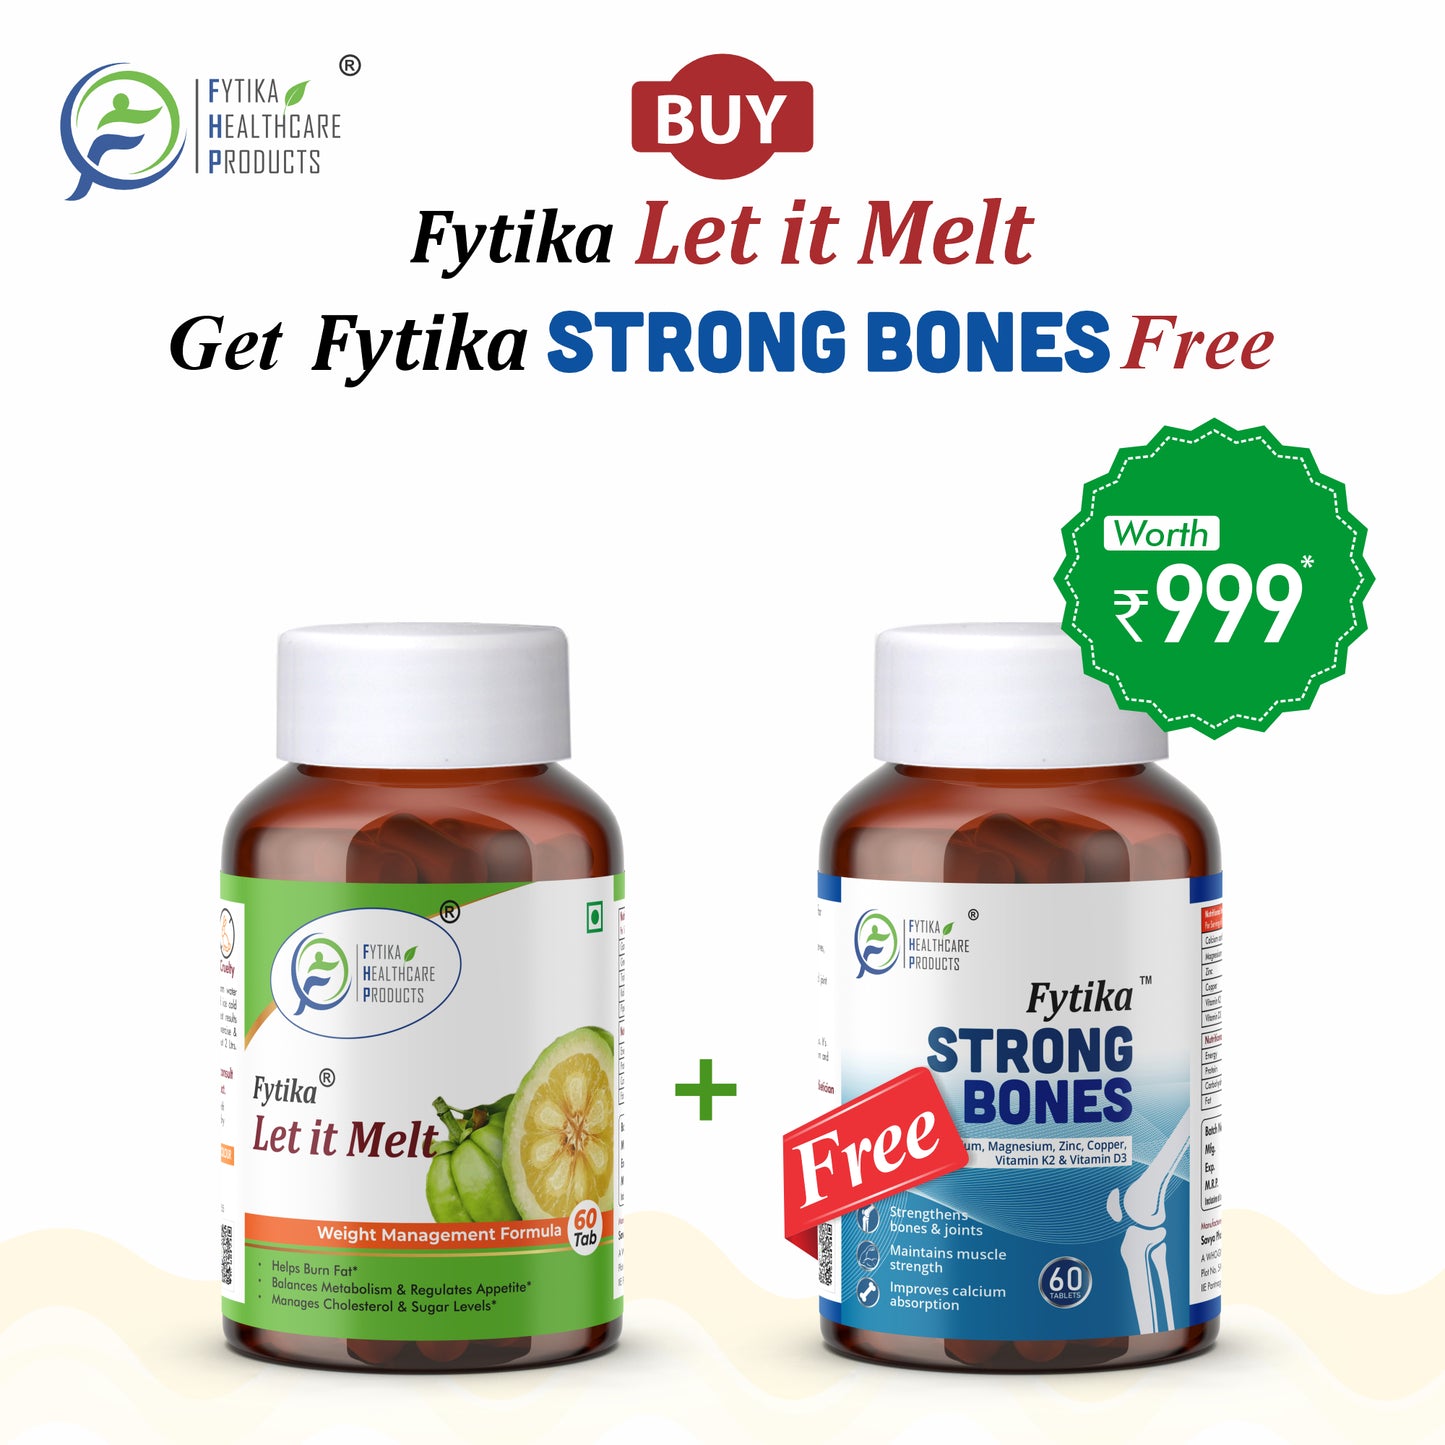 Get FREE Fytika Strong Bones with Fytika Let It Melt